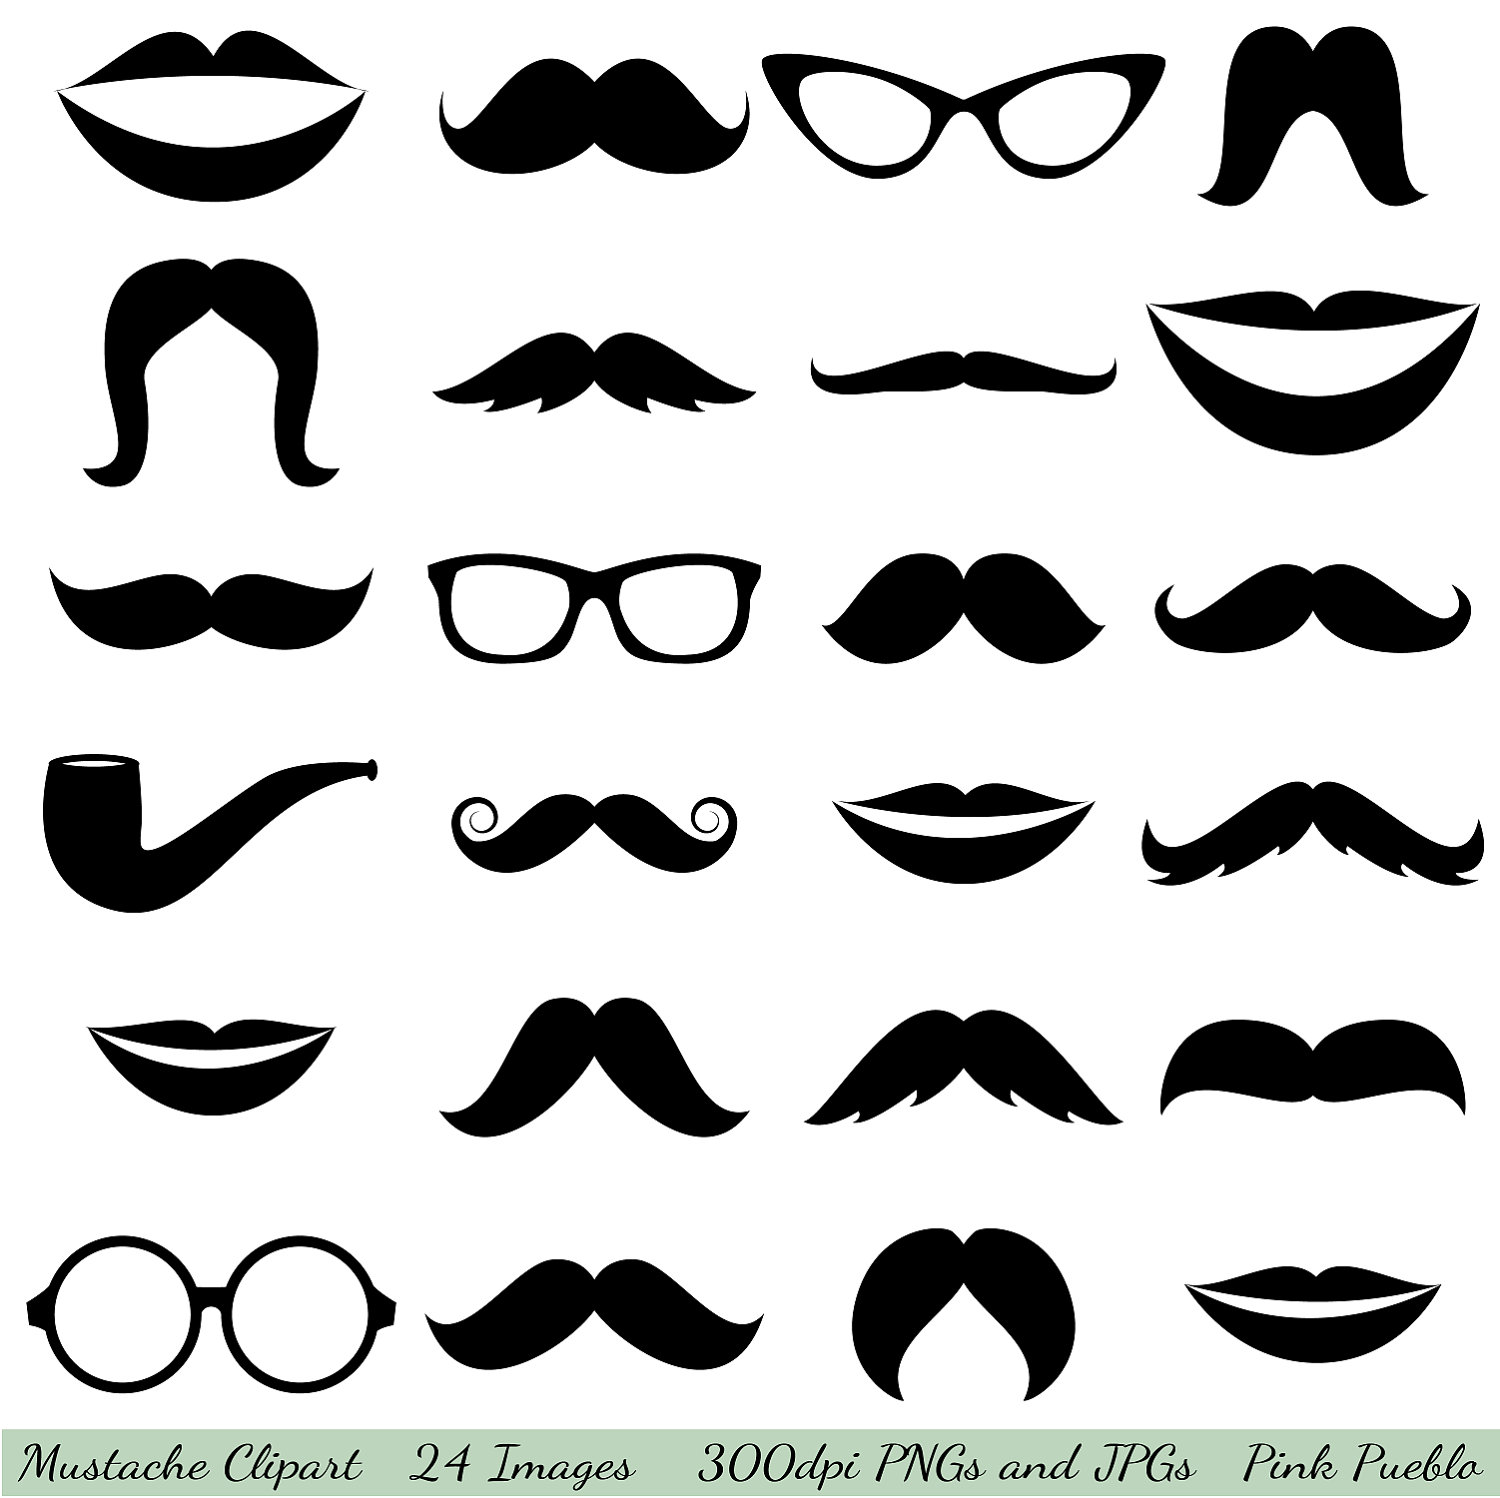 Popular items for mustache clip art on Etsy